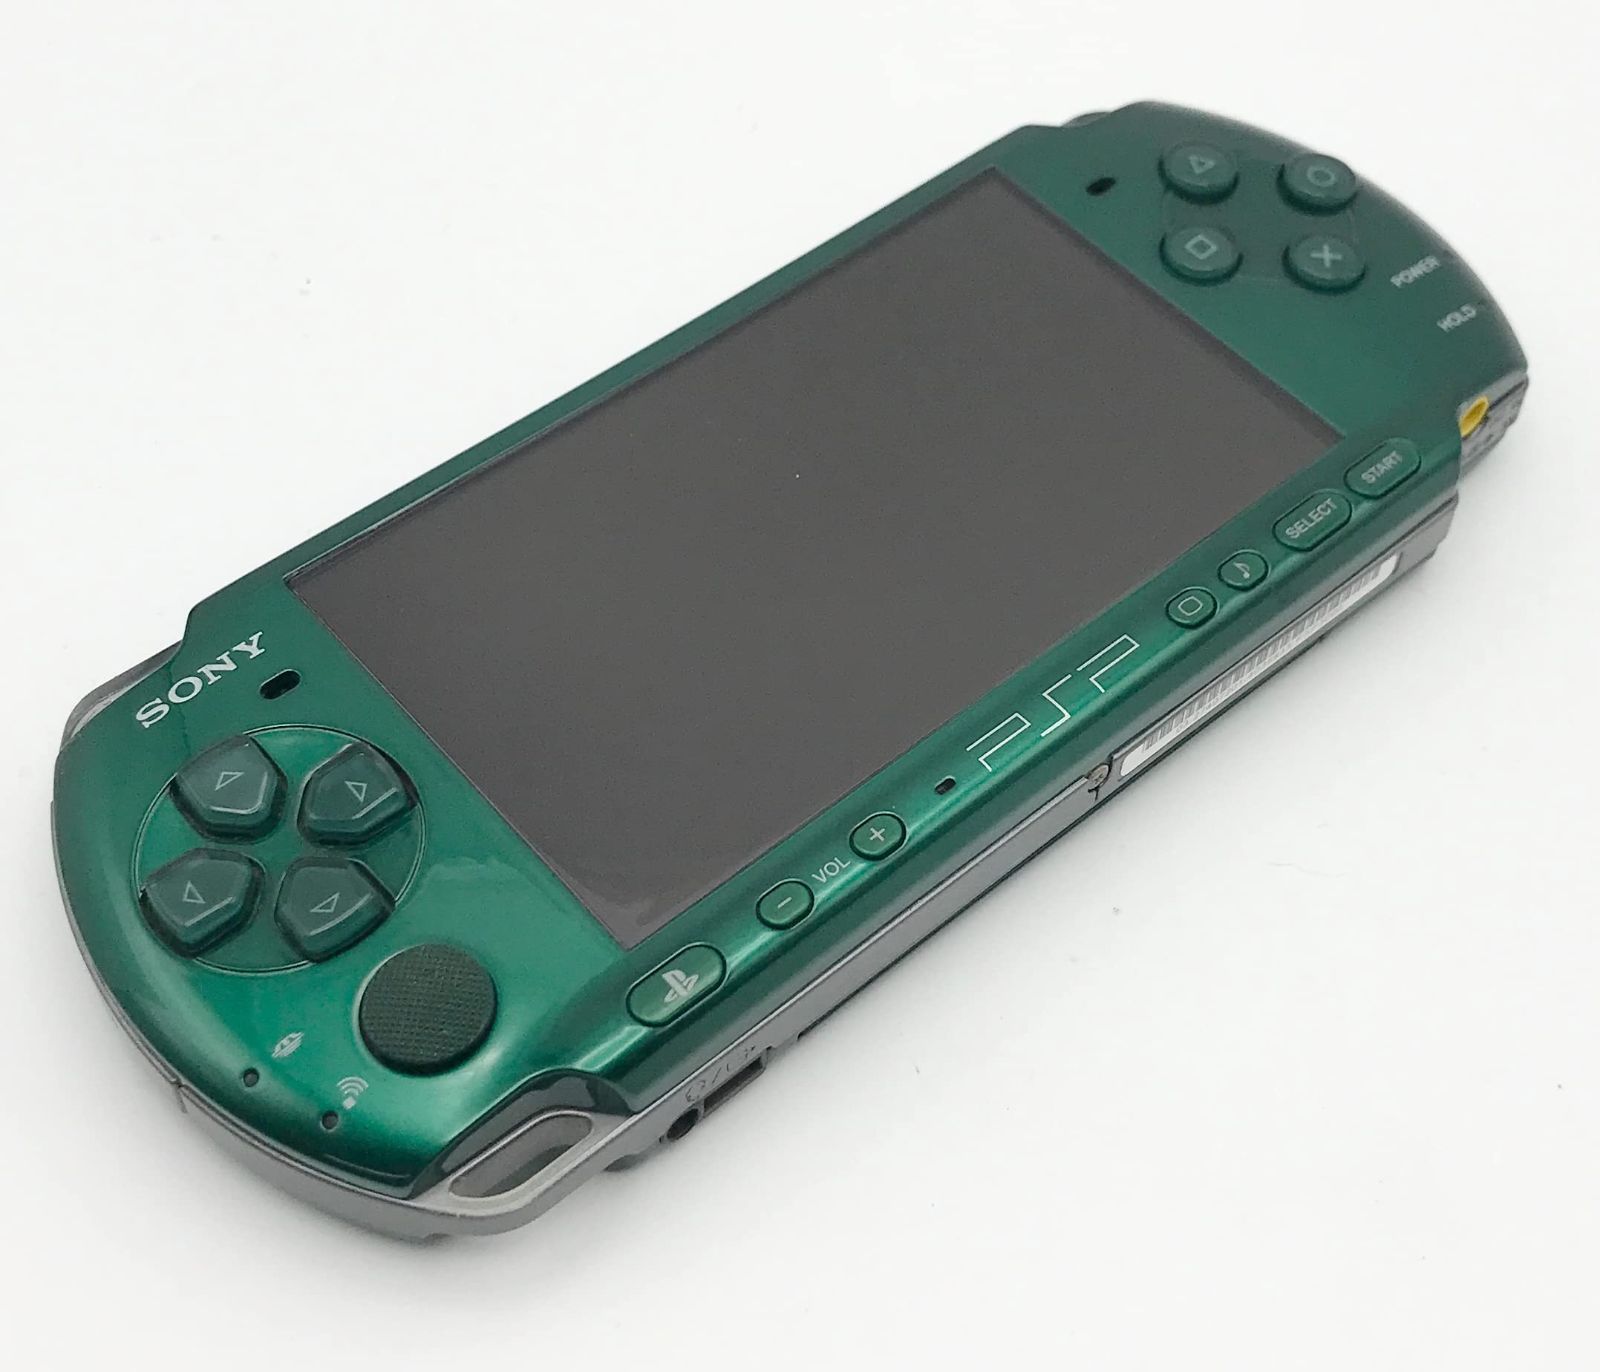 PSP3000 スピリティッドグリーン FW6.60 ソニー sony 動作OK管理番号g